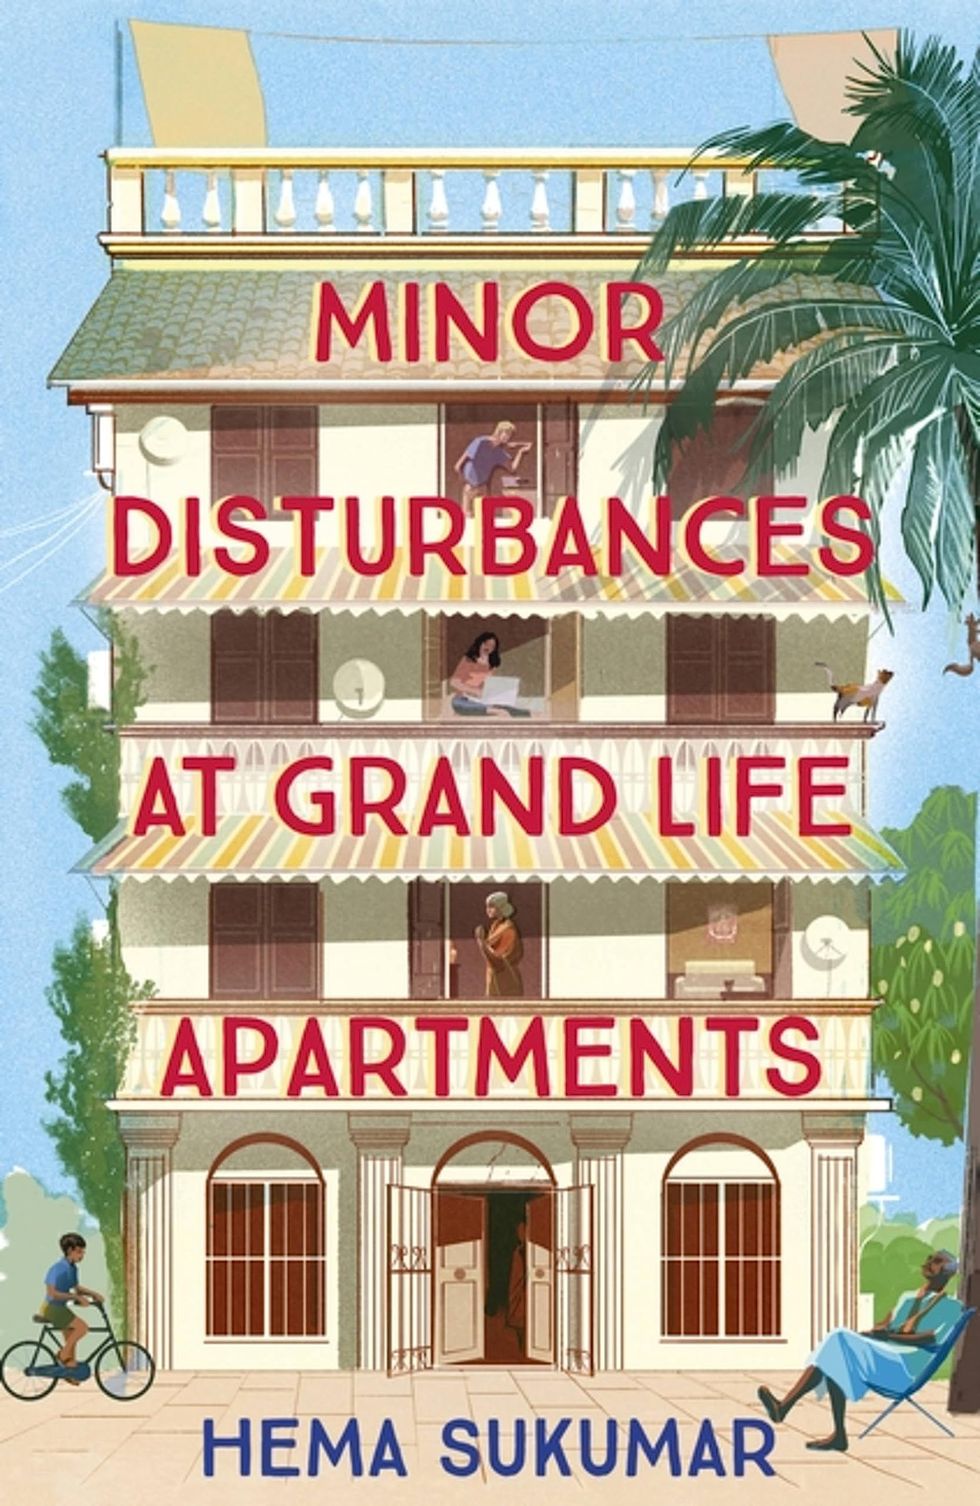 Minor Disturbances at Grand Life Apartments by Hema Sukumar